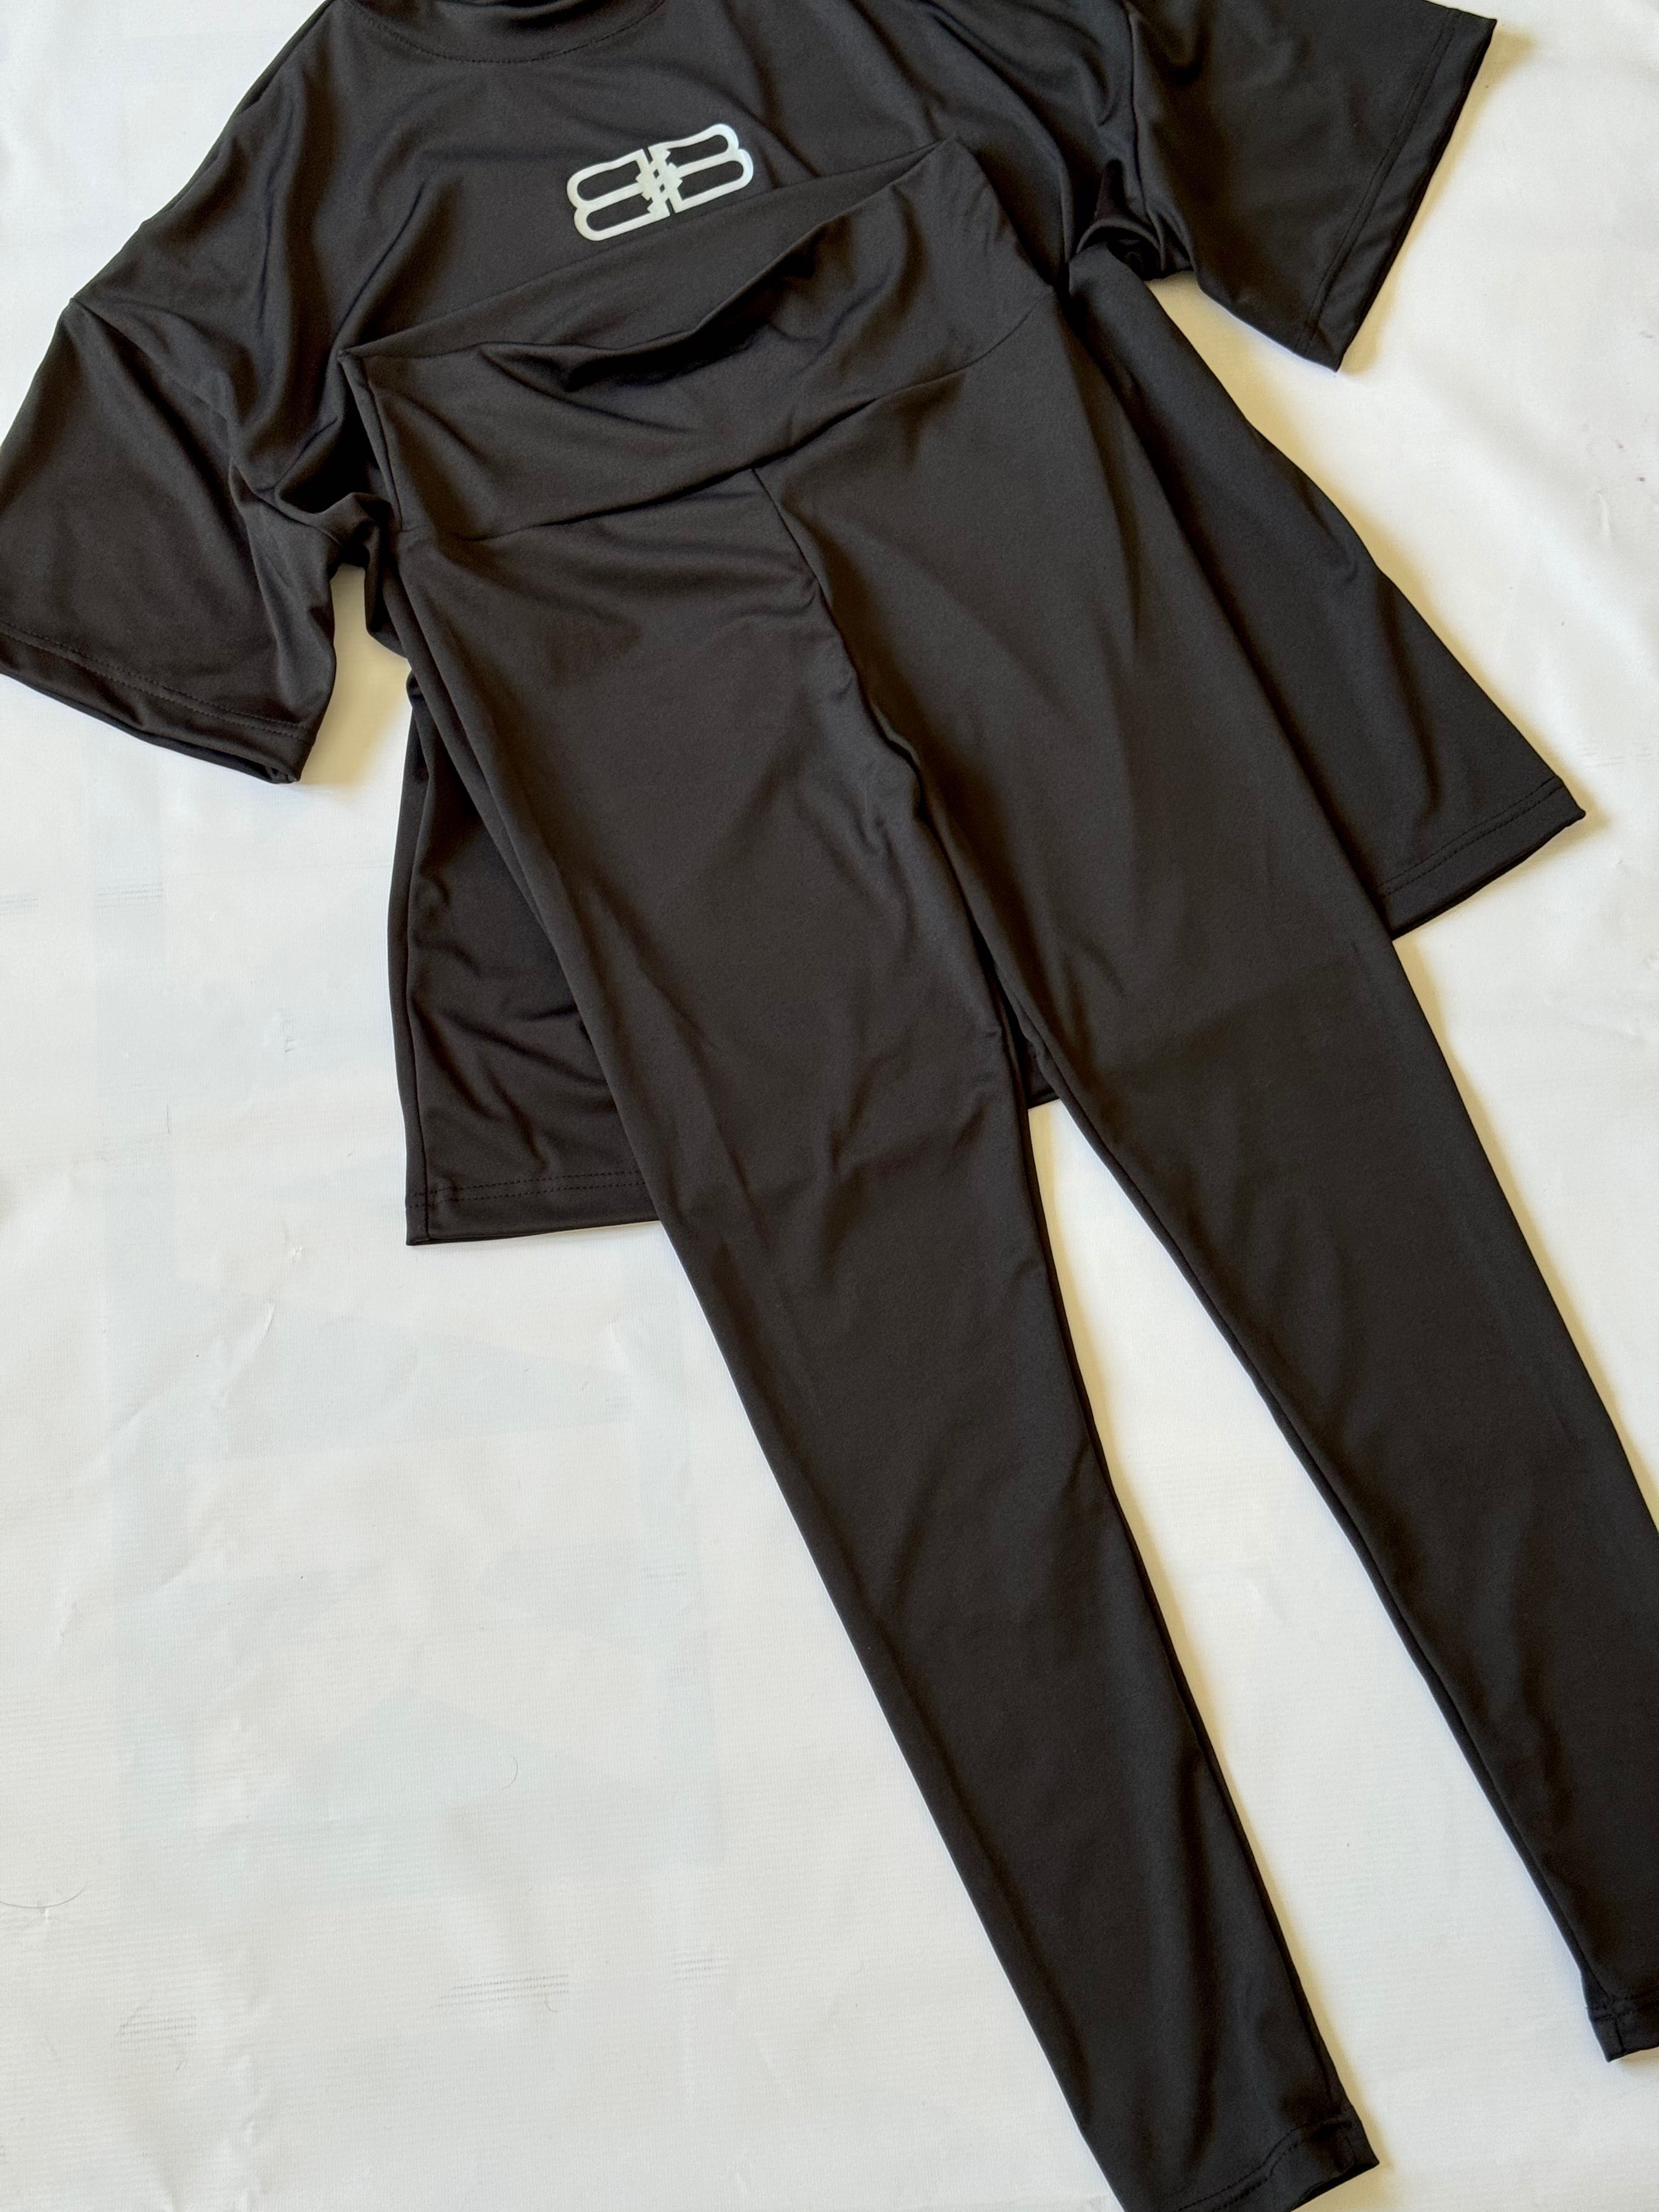 Komplet dresowy czarny damski Balenciaga L-XL